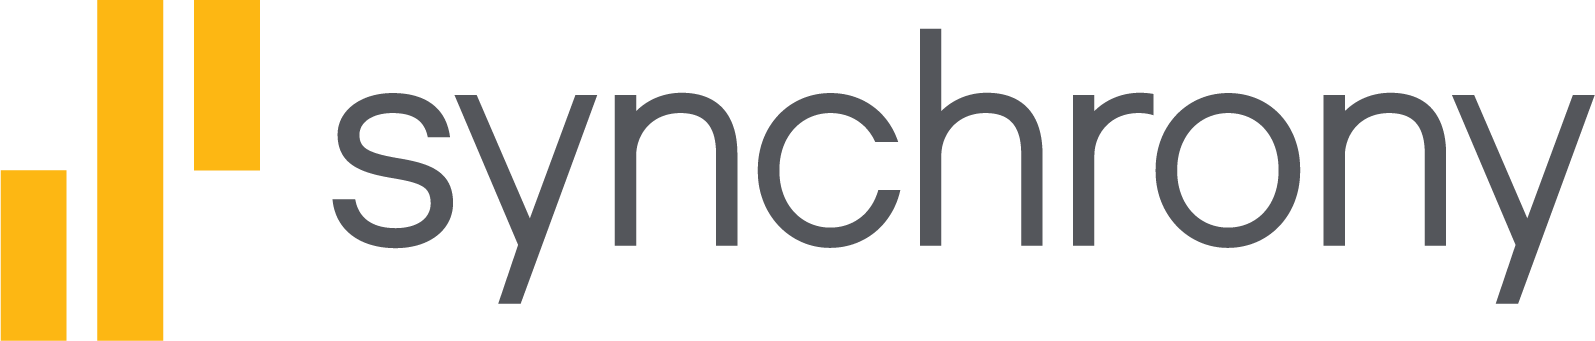 Synchrony Bank gold bar and gray text logo